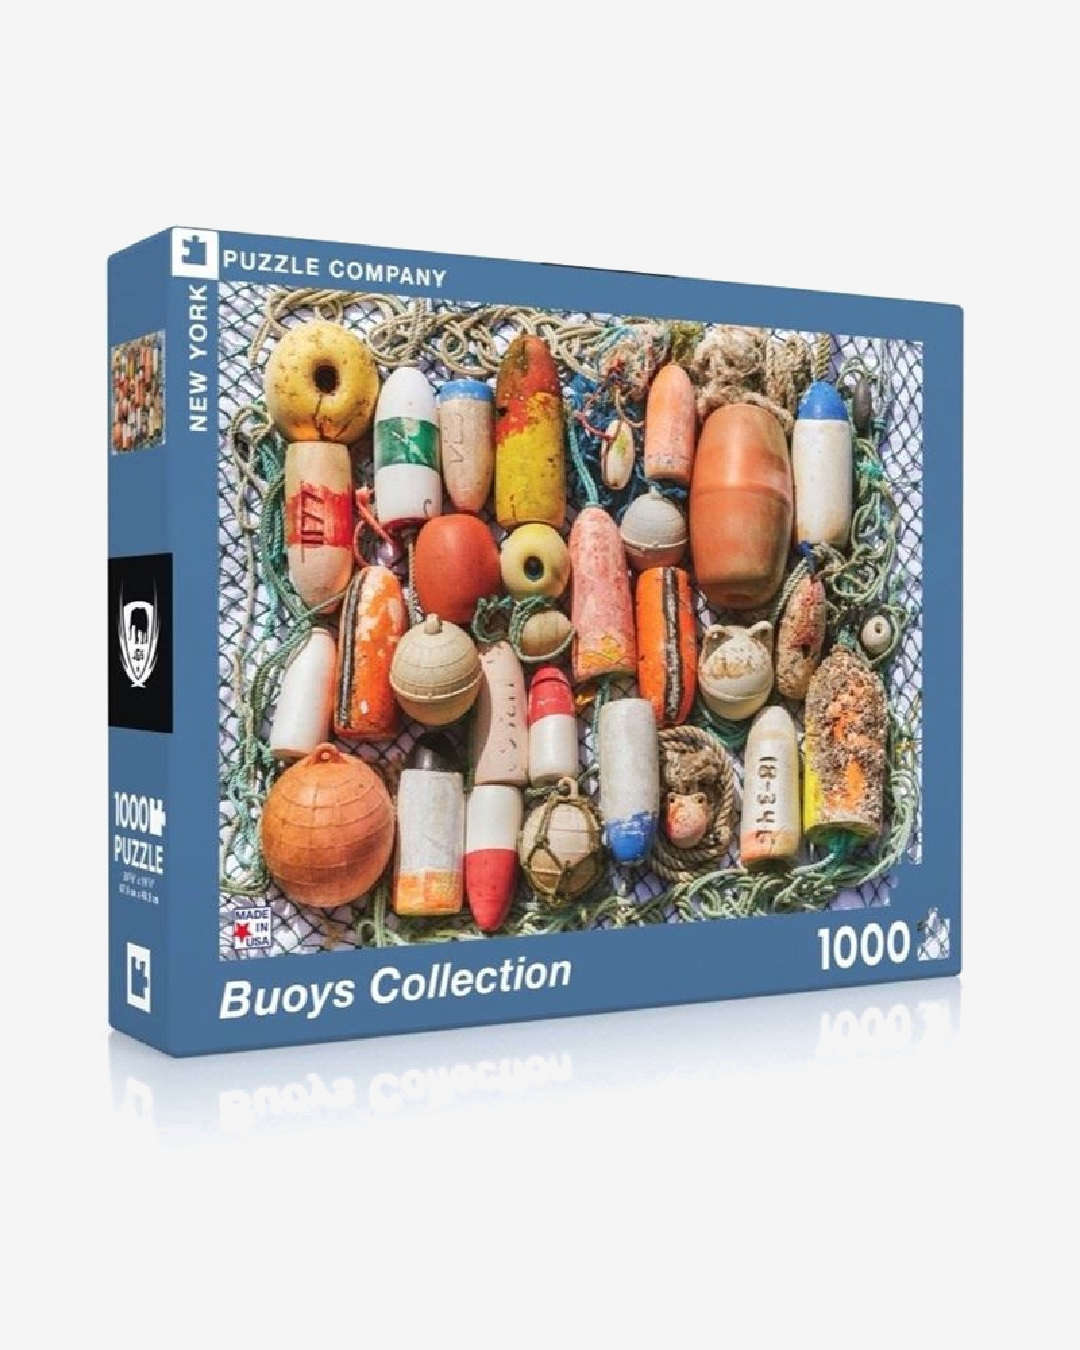 Bouys puzzle box